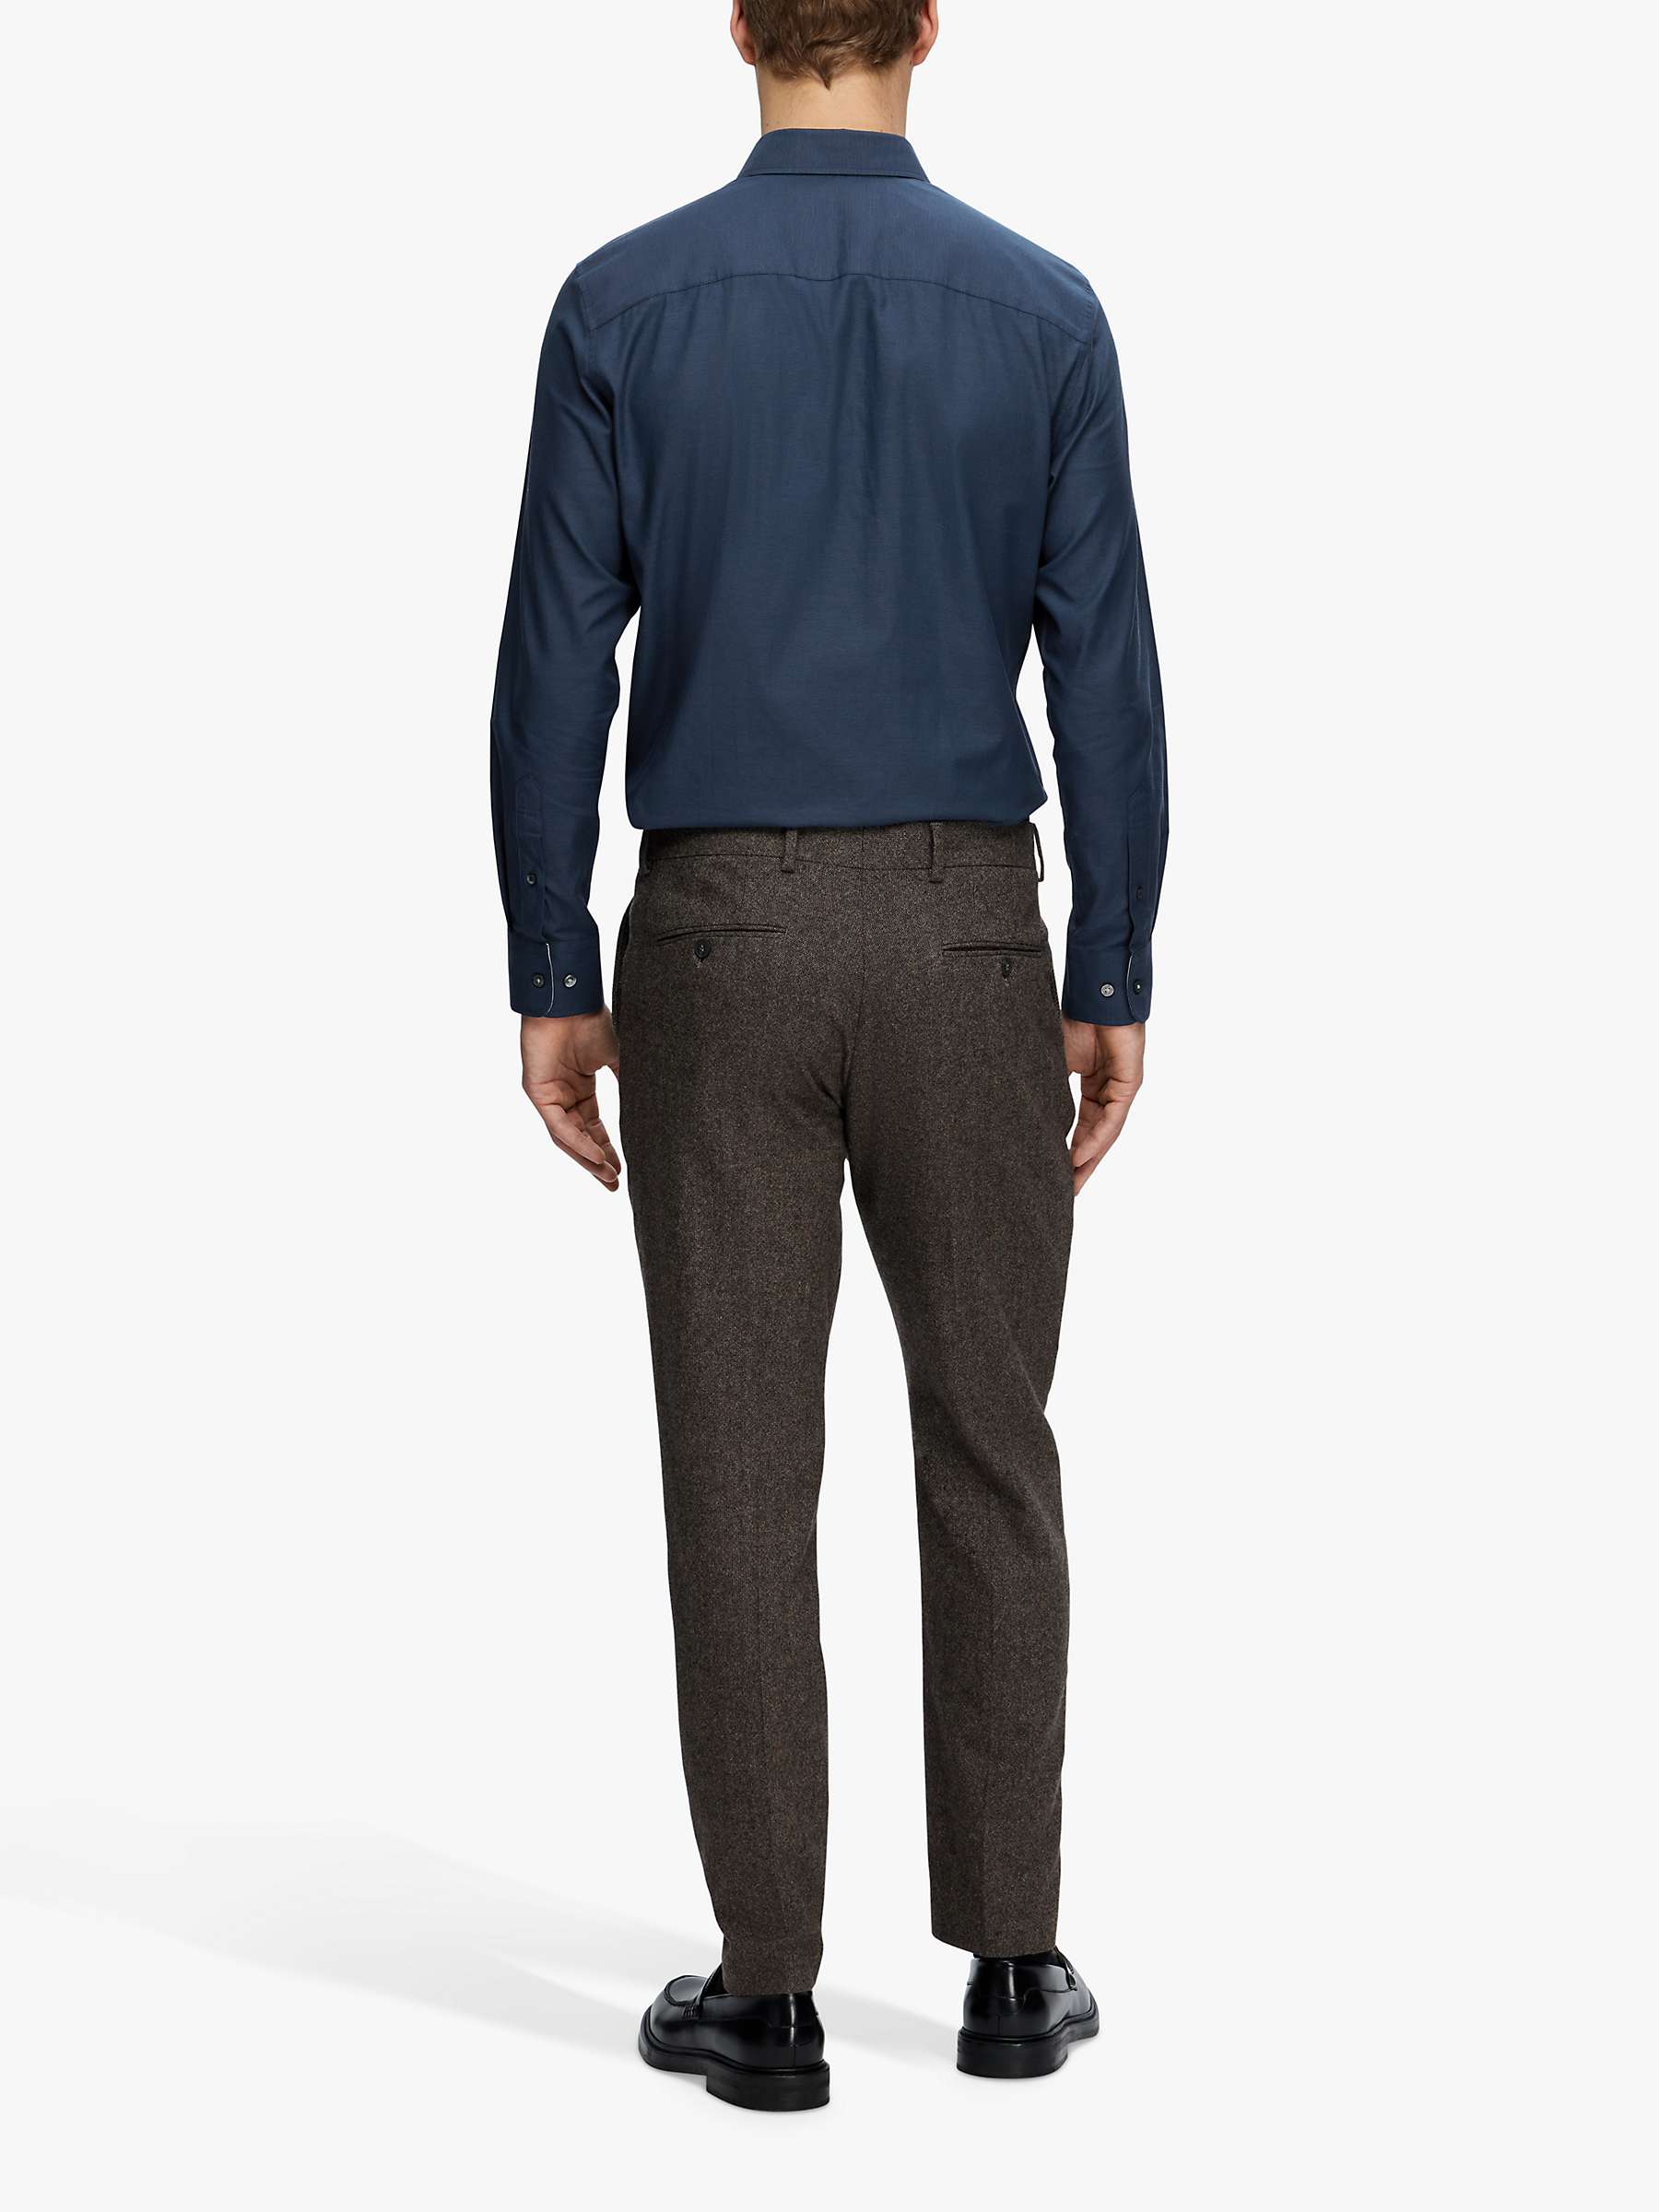 Buy SELECTED HOMME Slim Fit Long Sleeve Shirt, Navy Online at johnlewis.com